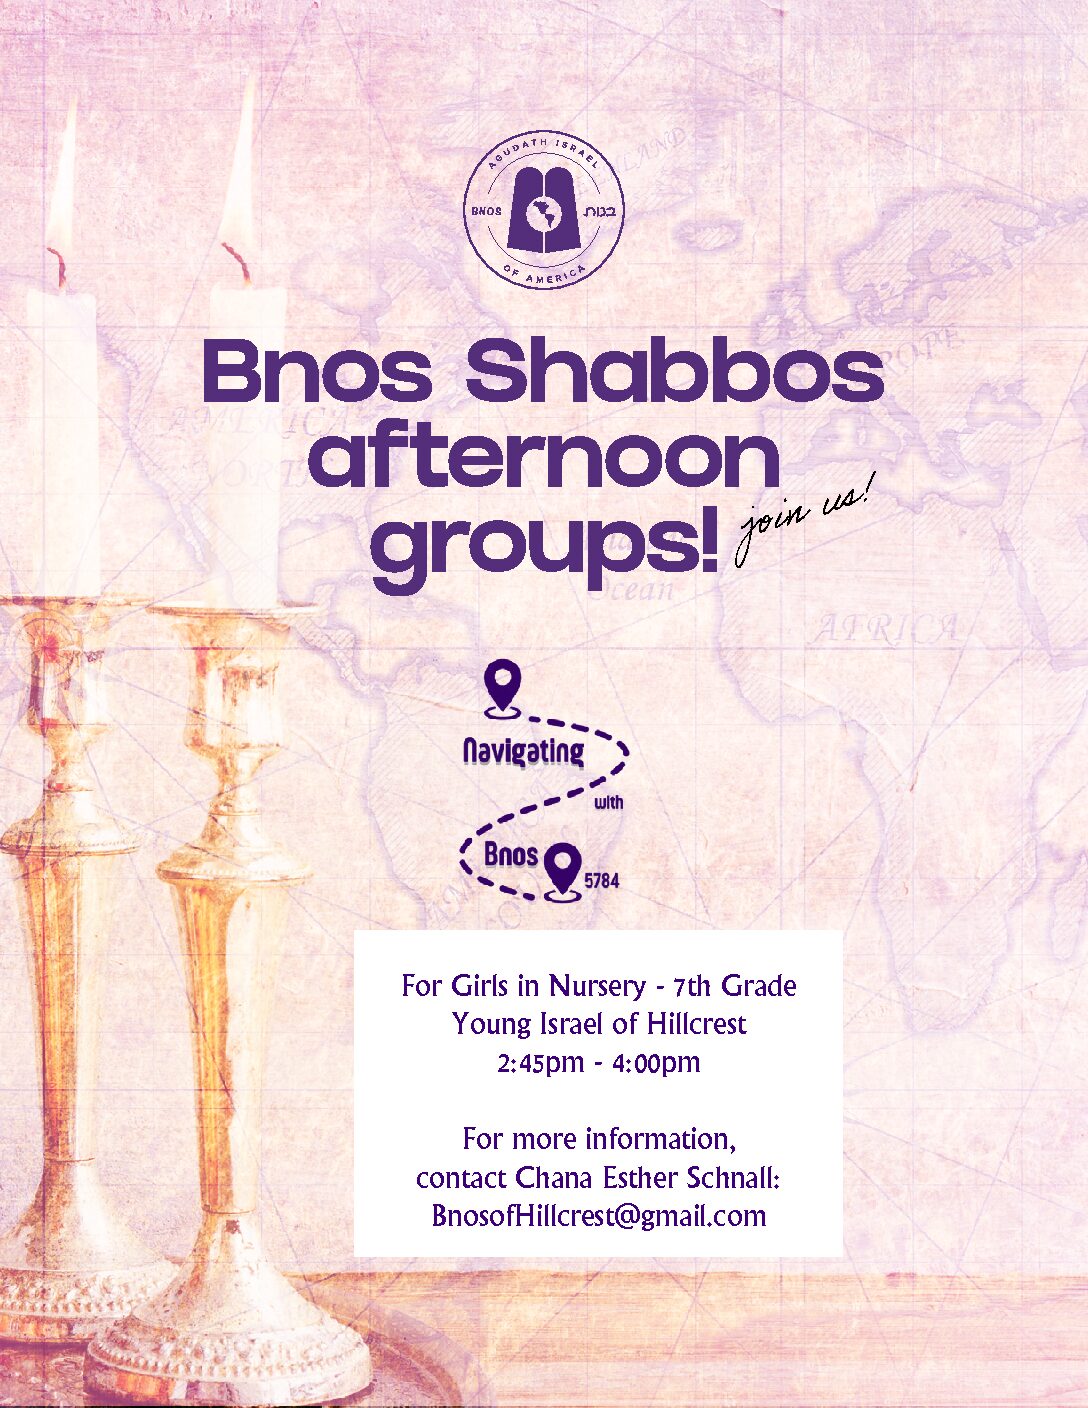 Bnos shabbos groups 5784